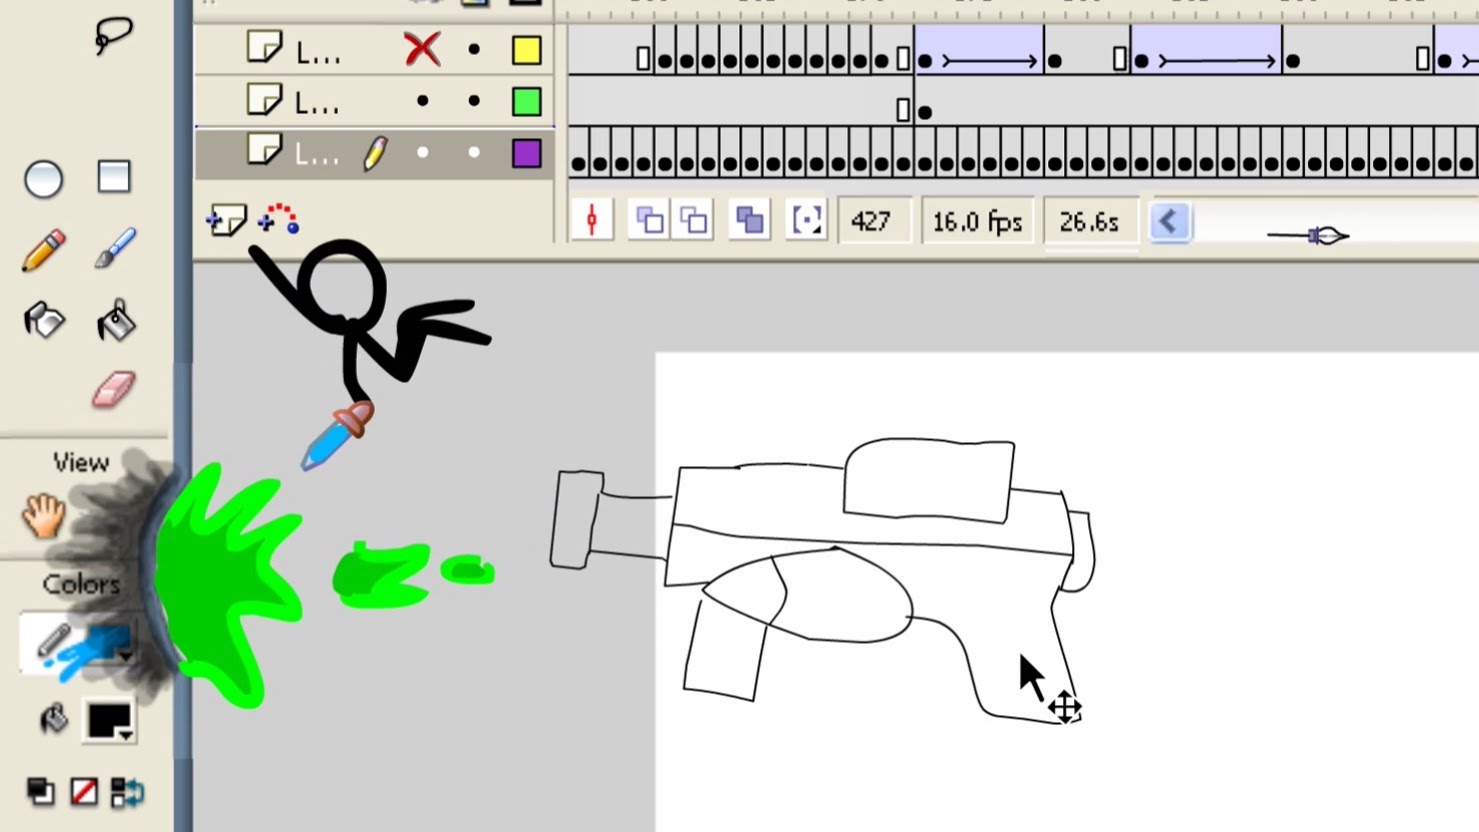 animator vs animation alan becker